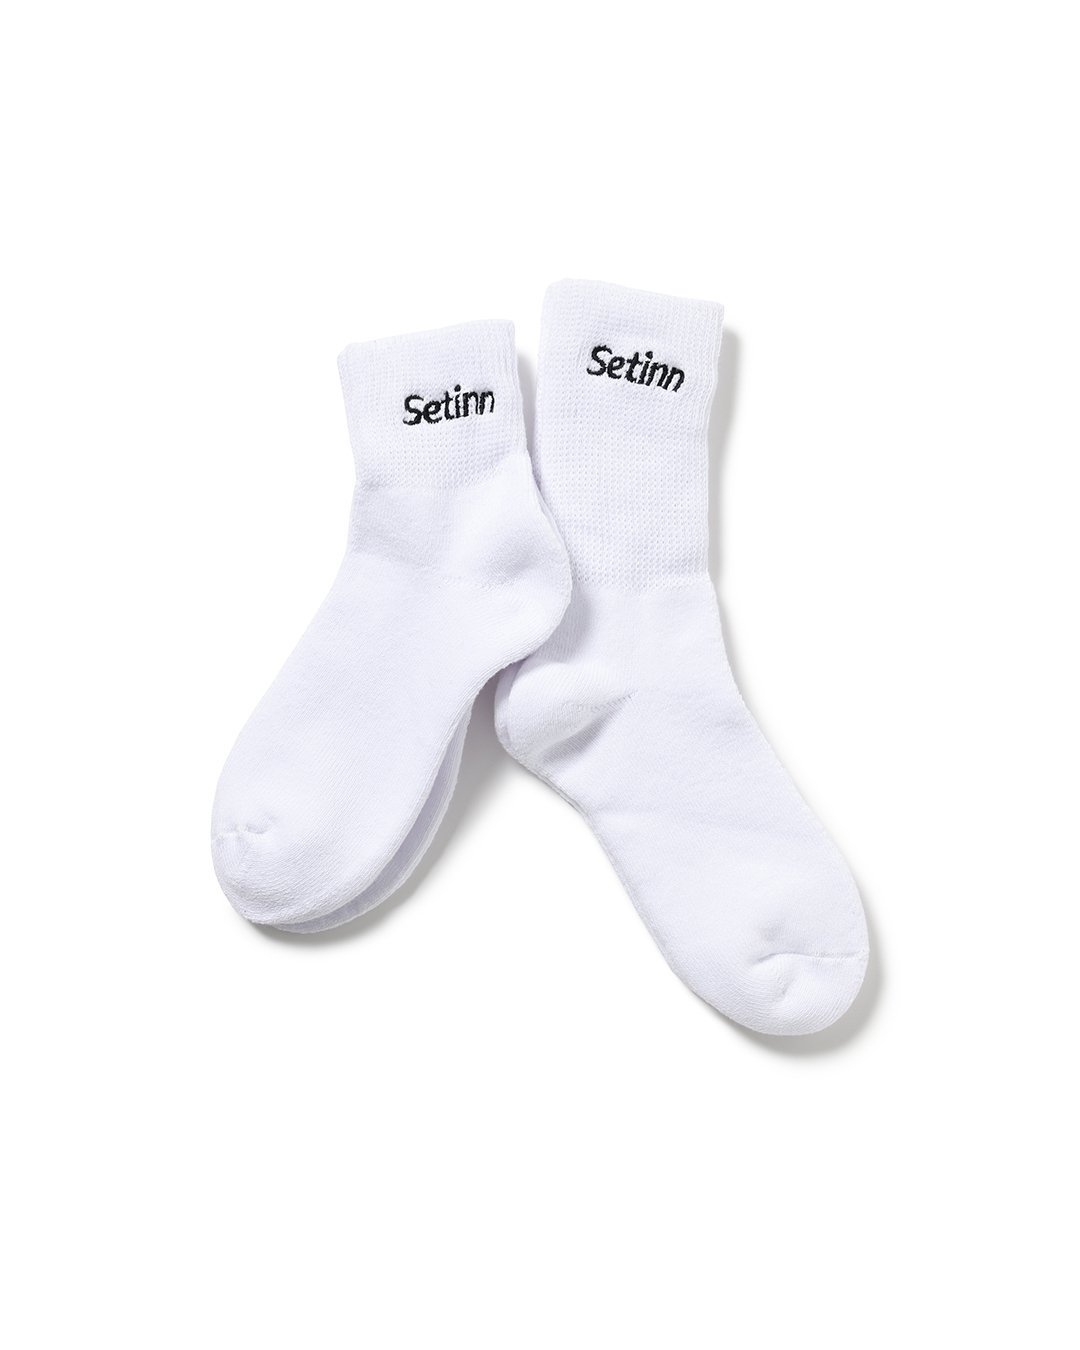 Setinn<br>Club Socks 2P
<br>
